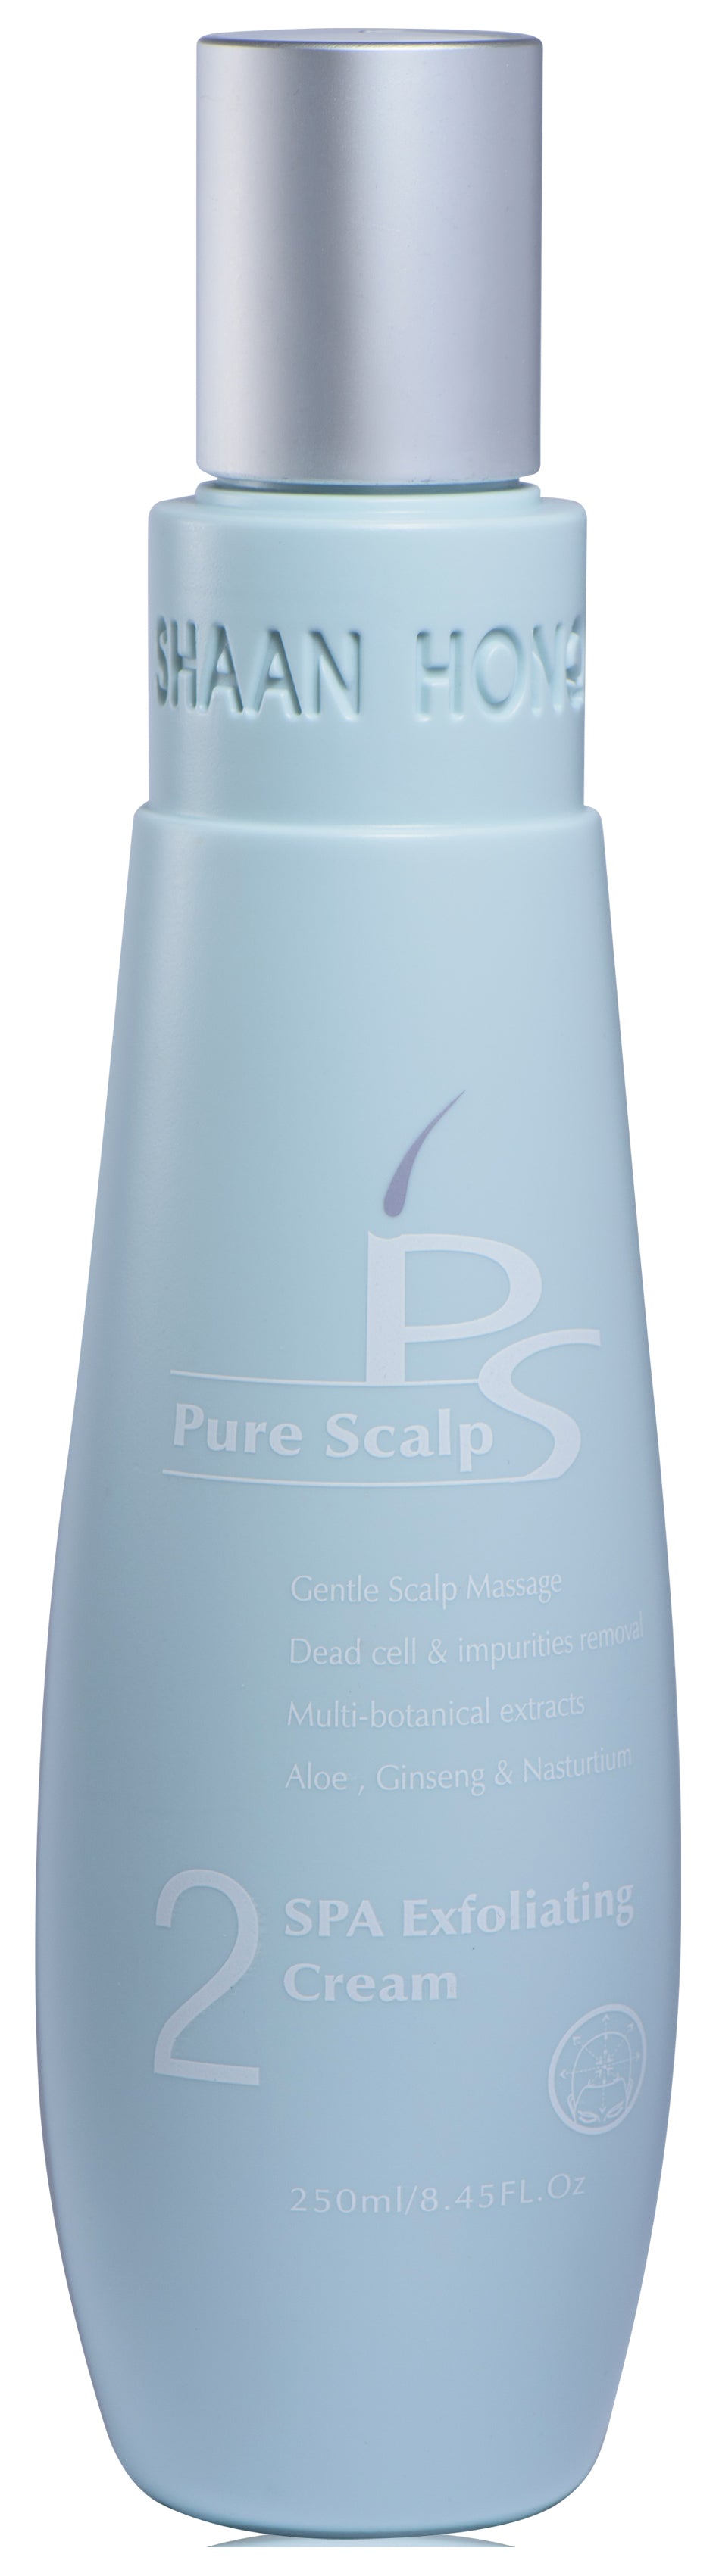 Pure Scalp (2) SPA Exfoliating Cream 250ML